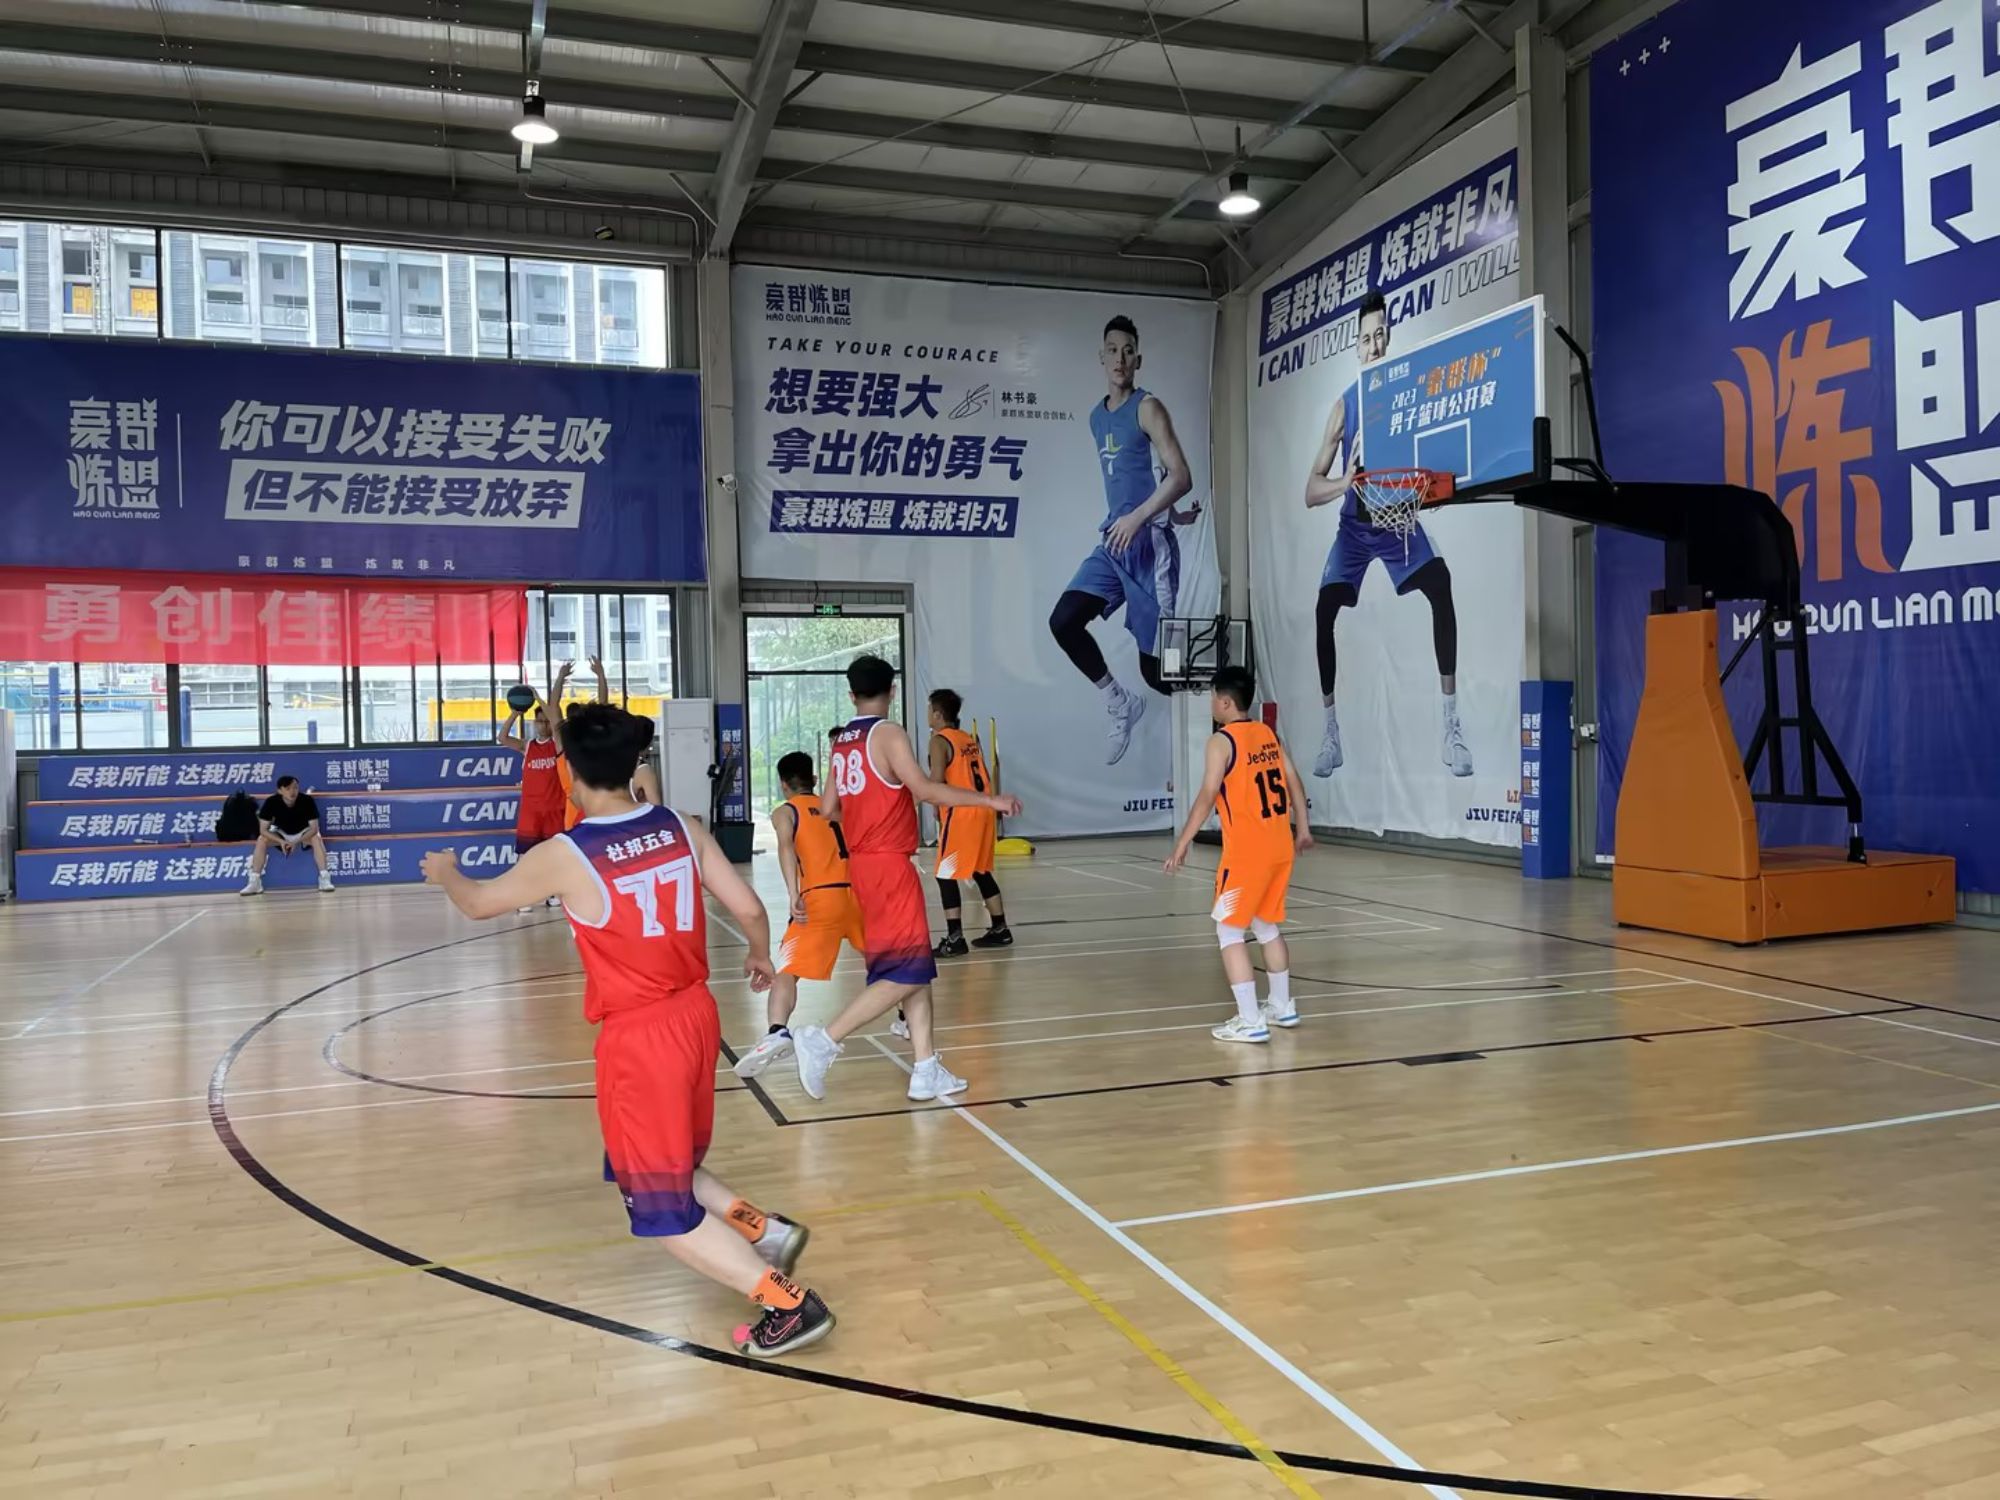 Elsker livet, elsker arbeidet, elsker ROEASY, Basket-konkurransen pågår for Guangdong Hardware Industry